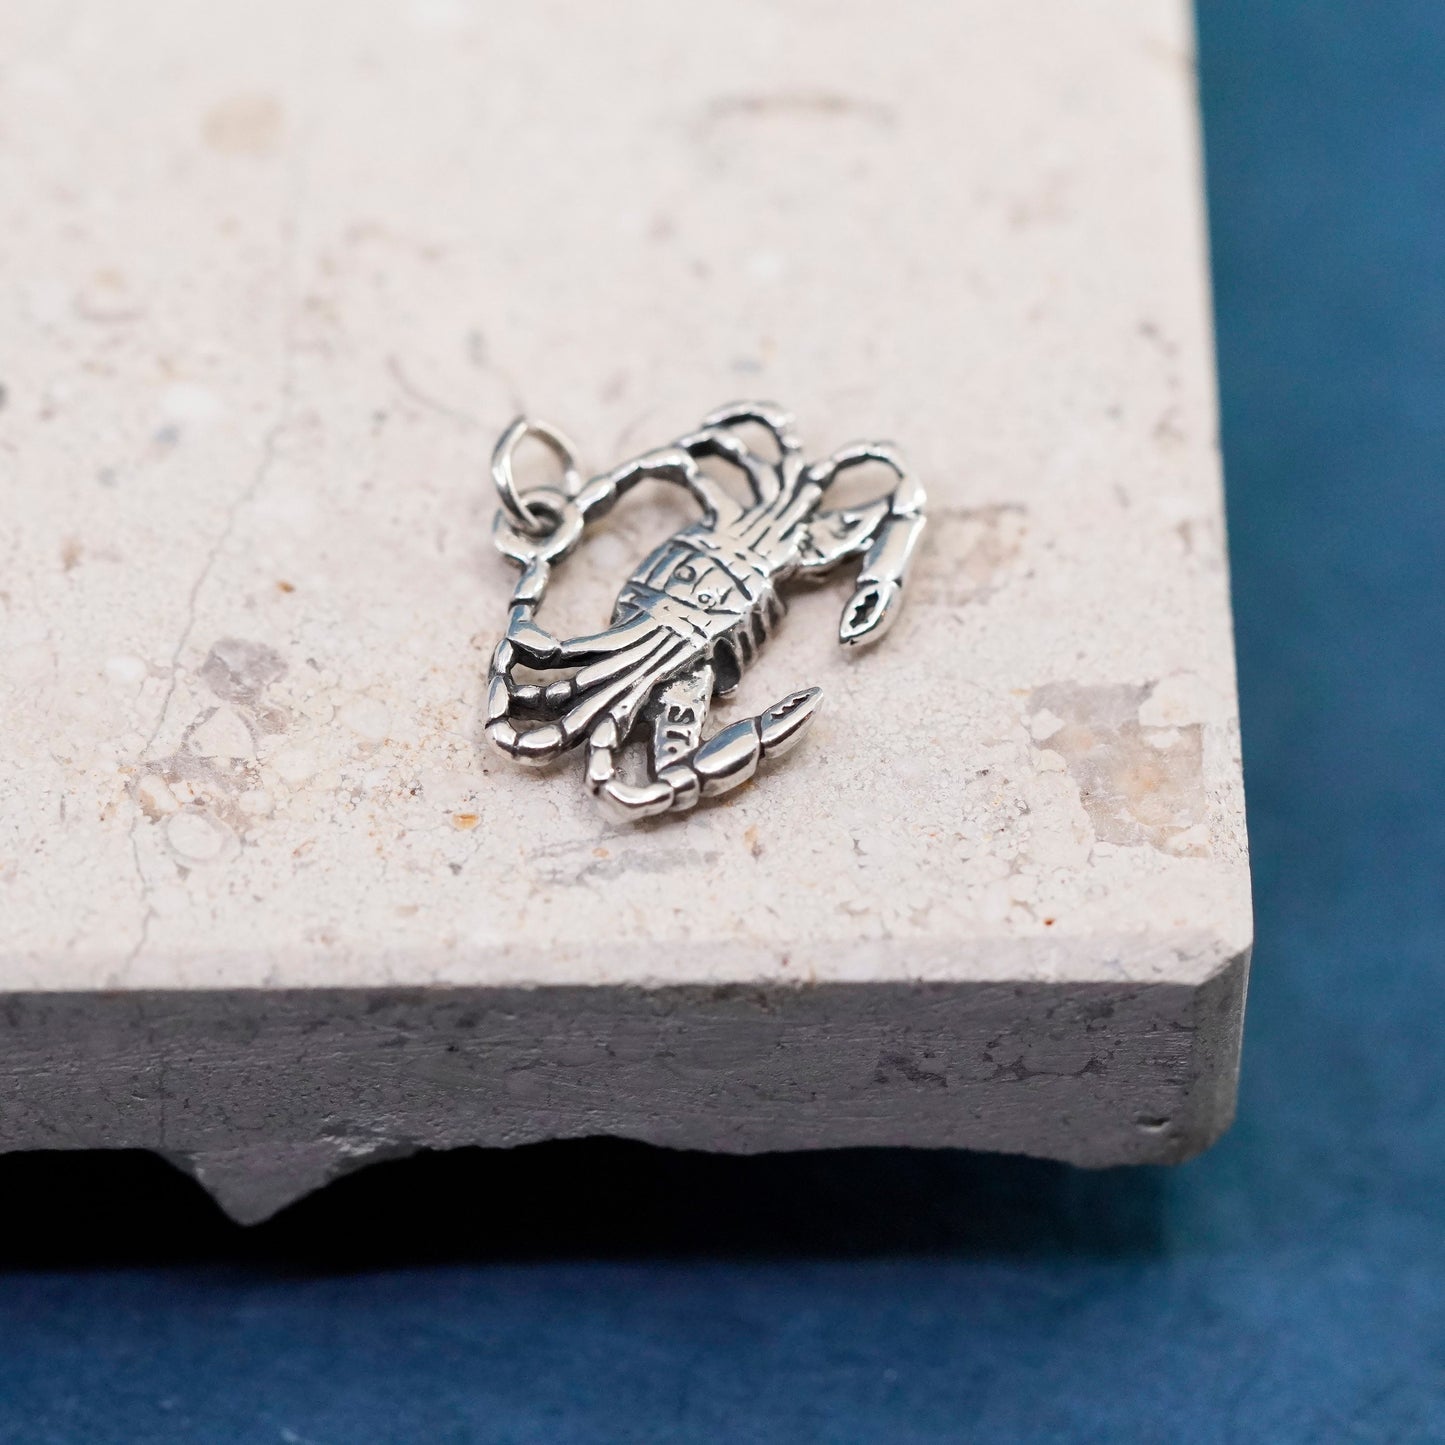 Vintage Sterling silver handmade pendant. 925 crab charm